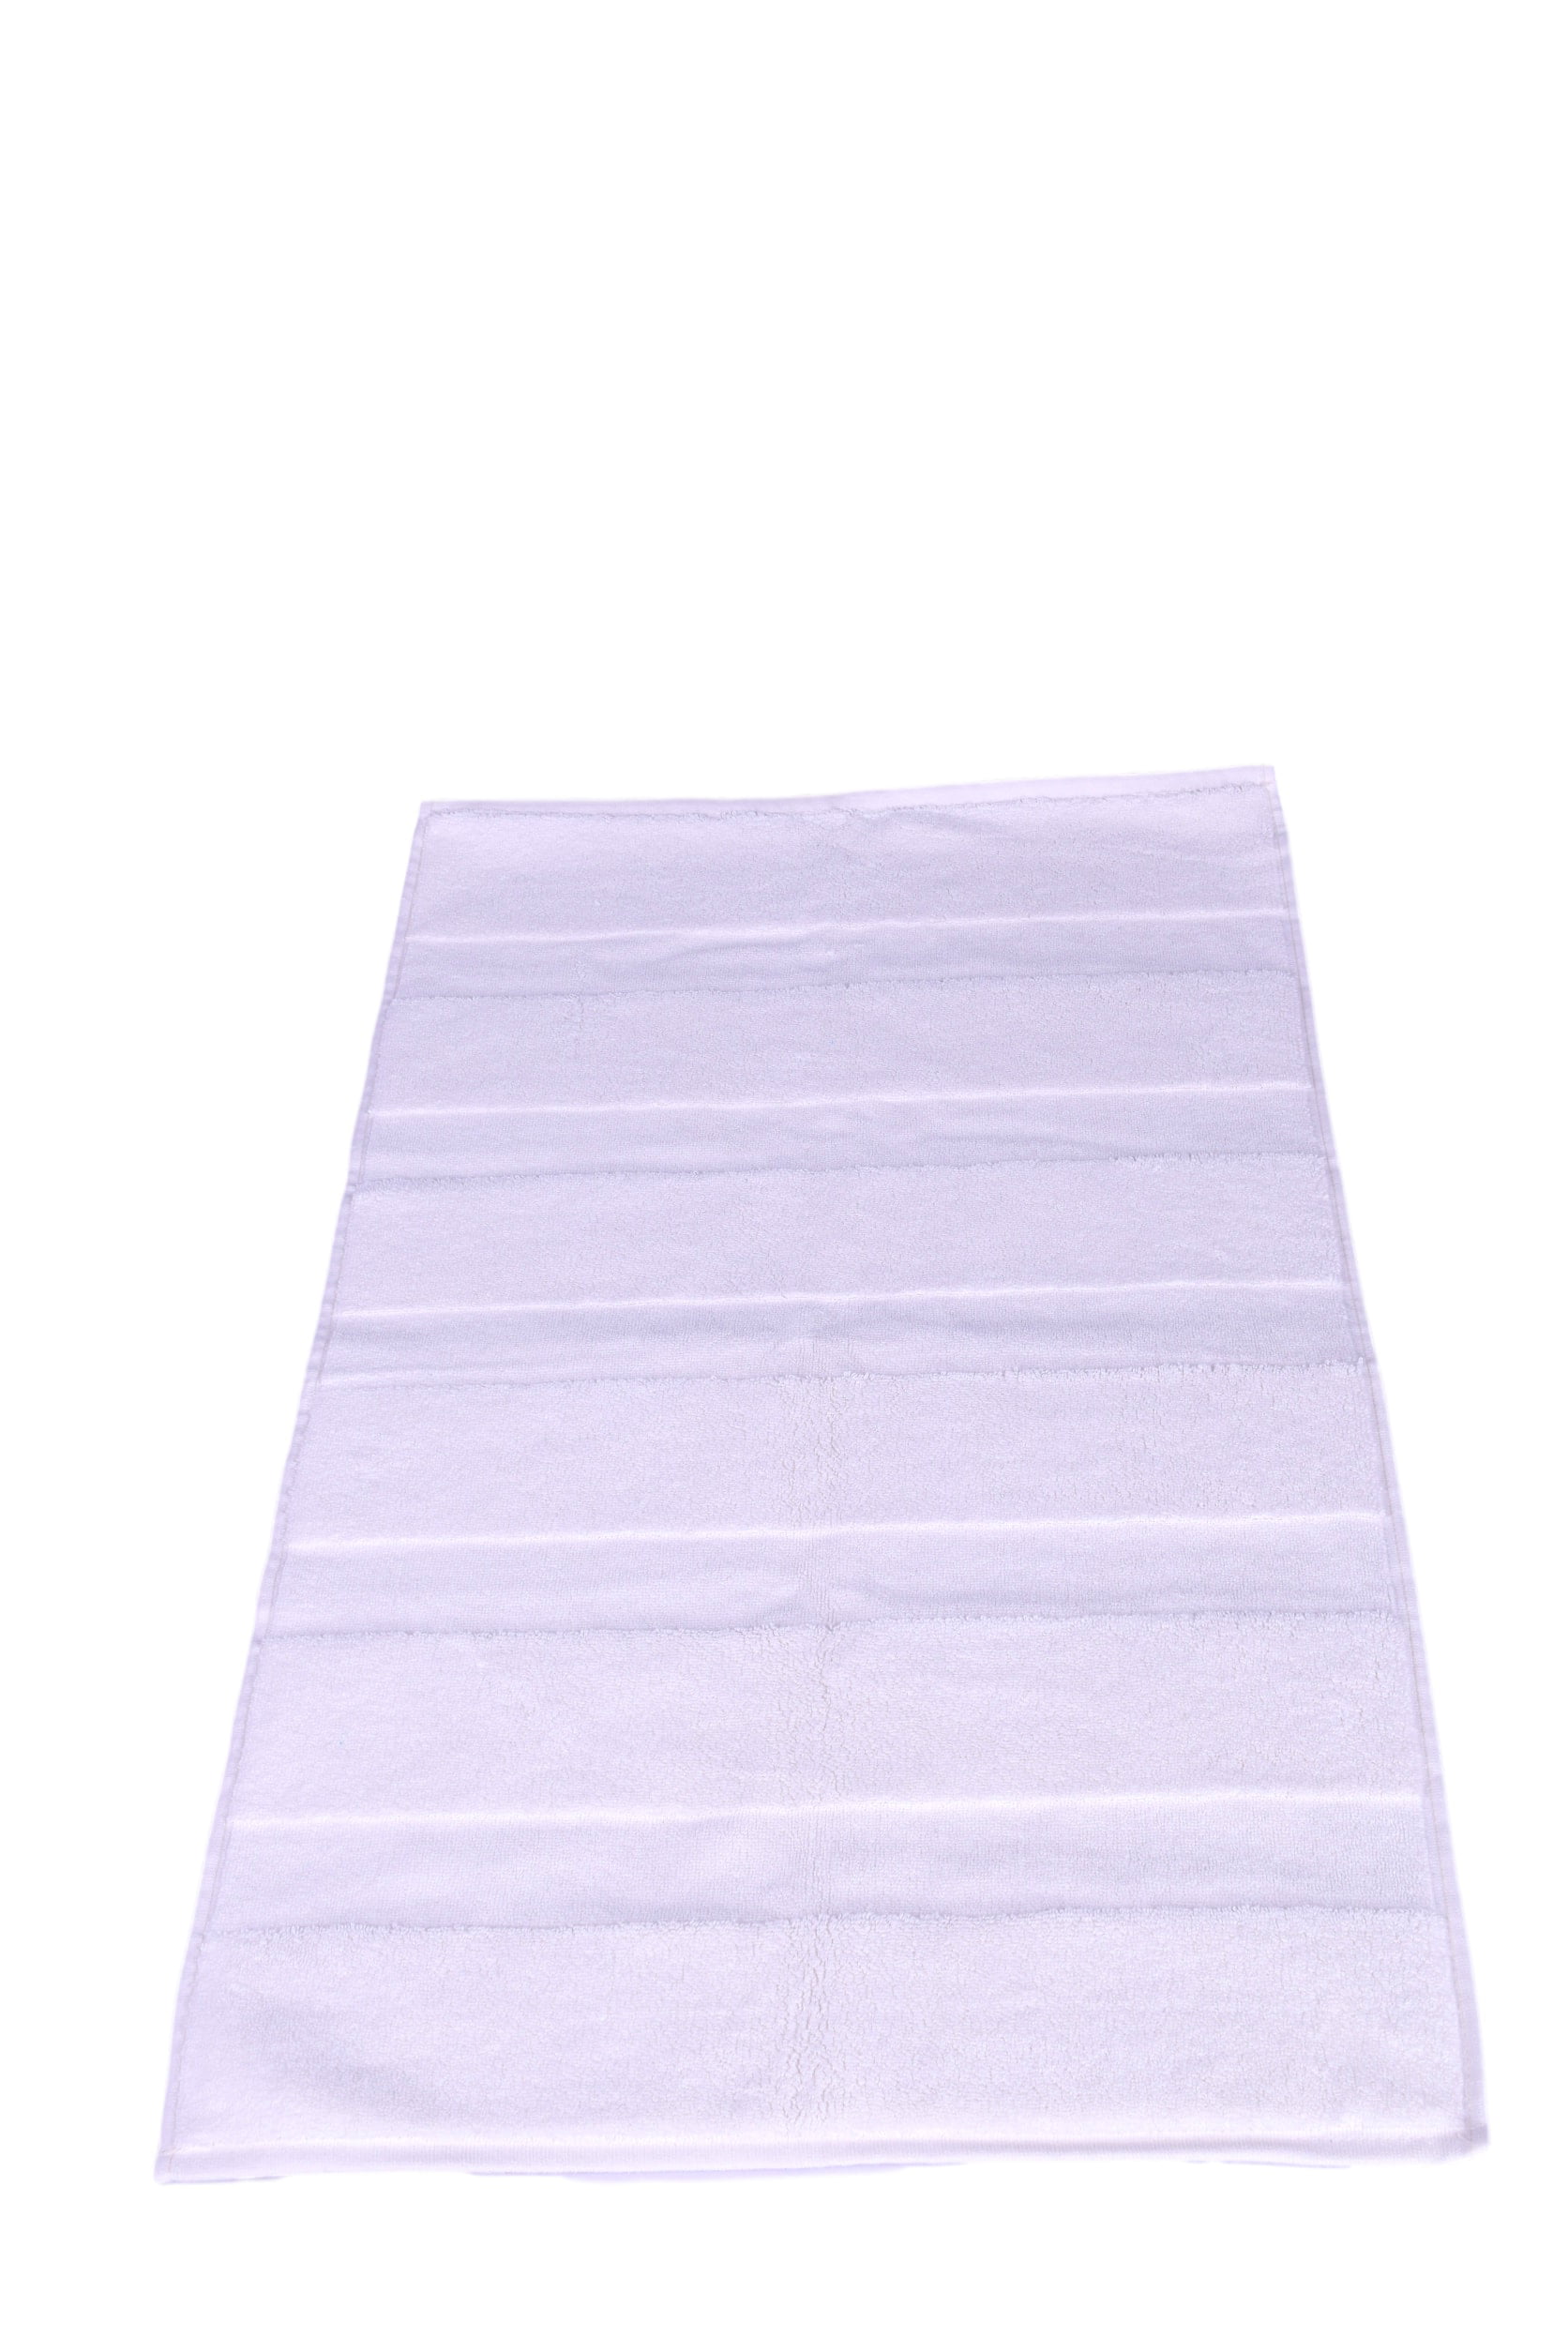 Puffy Cotton Premium Quality 100% Cotton Terry Cloth Towel Bath Mat Set of 2 